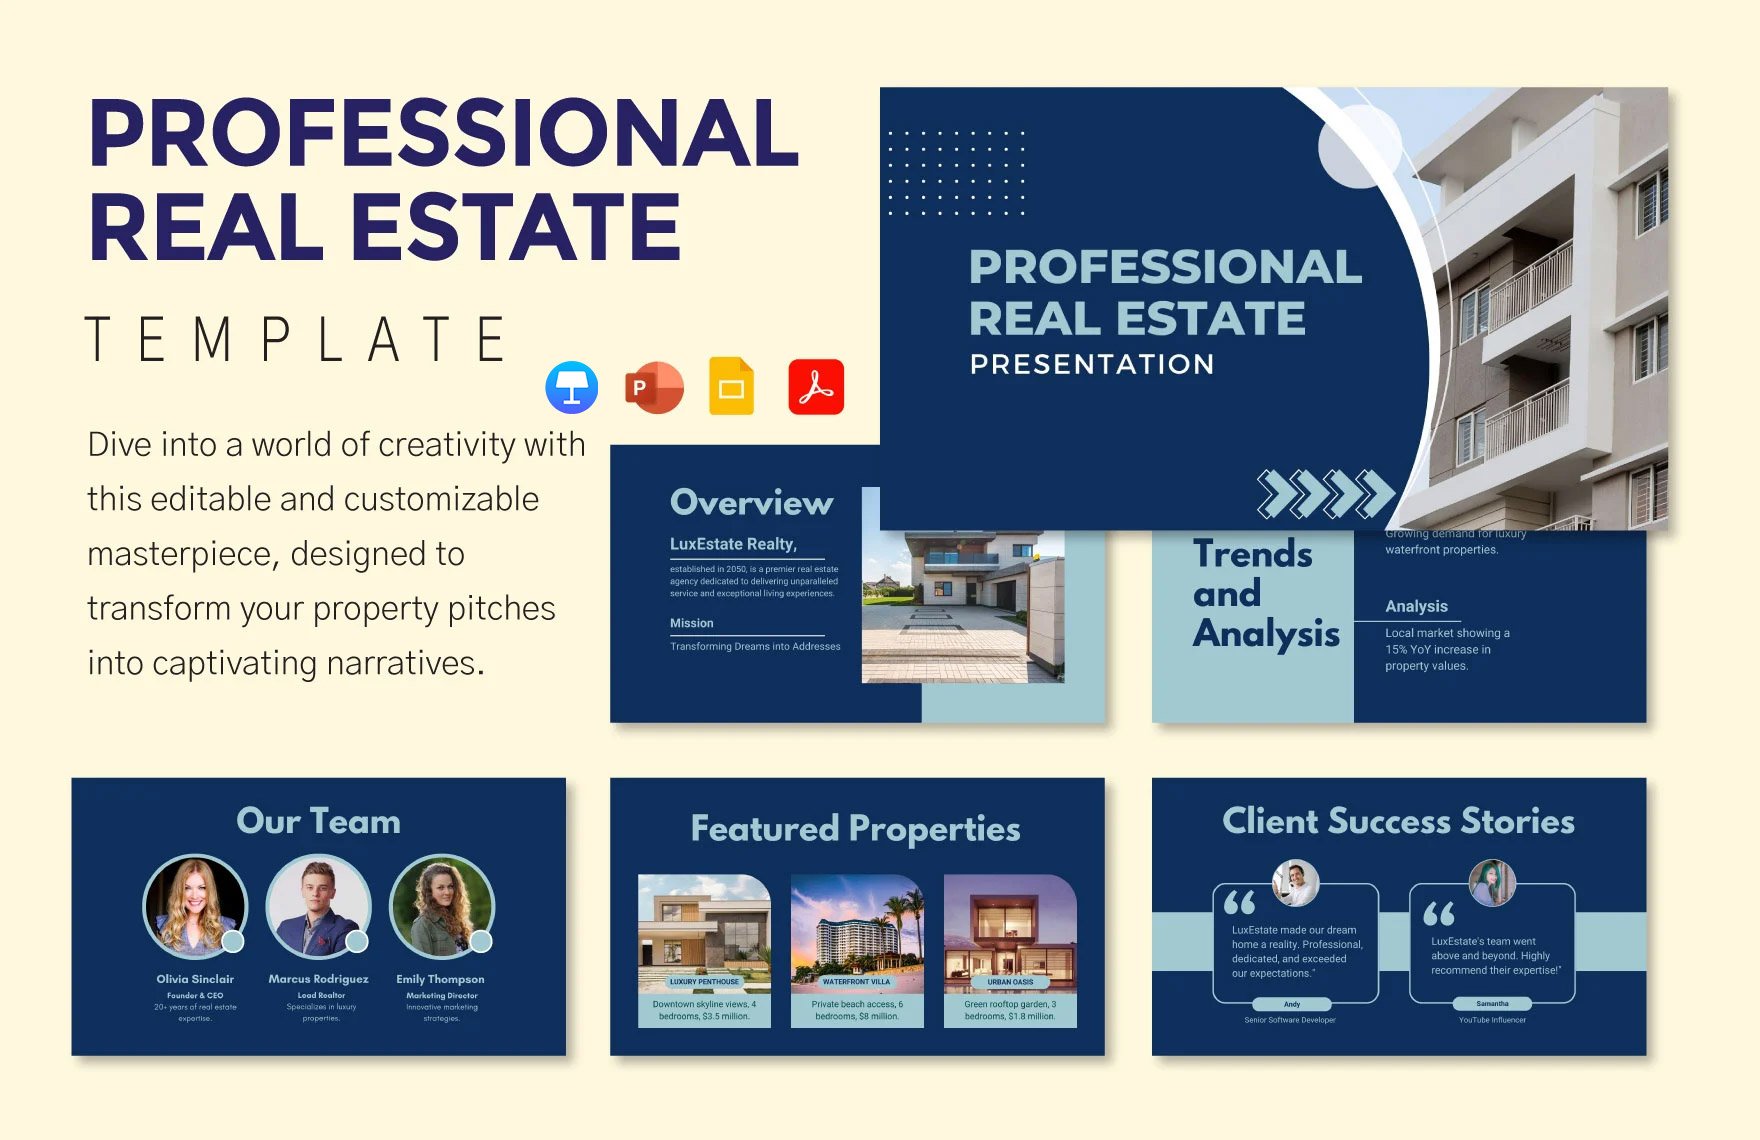 Professional Real Estate Template in PDF, PowerPoint, Google Slides, Apple Keynote